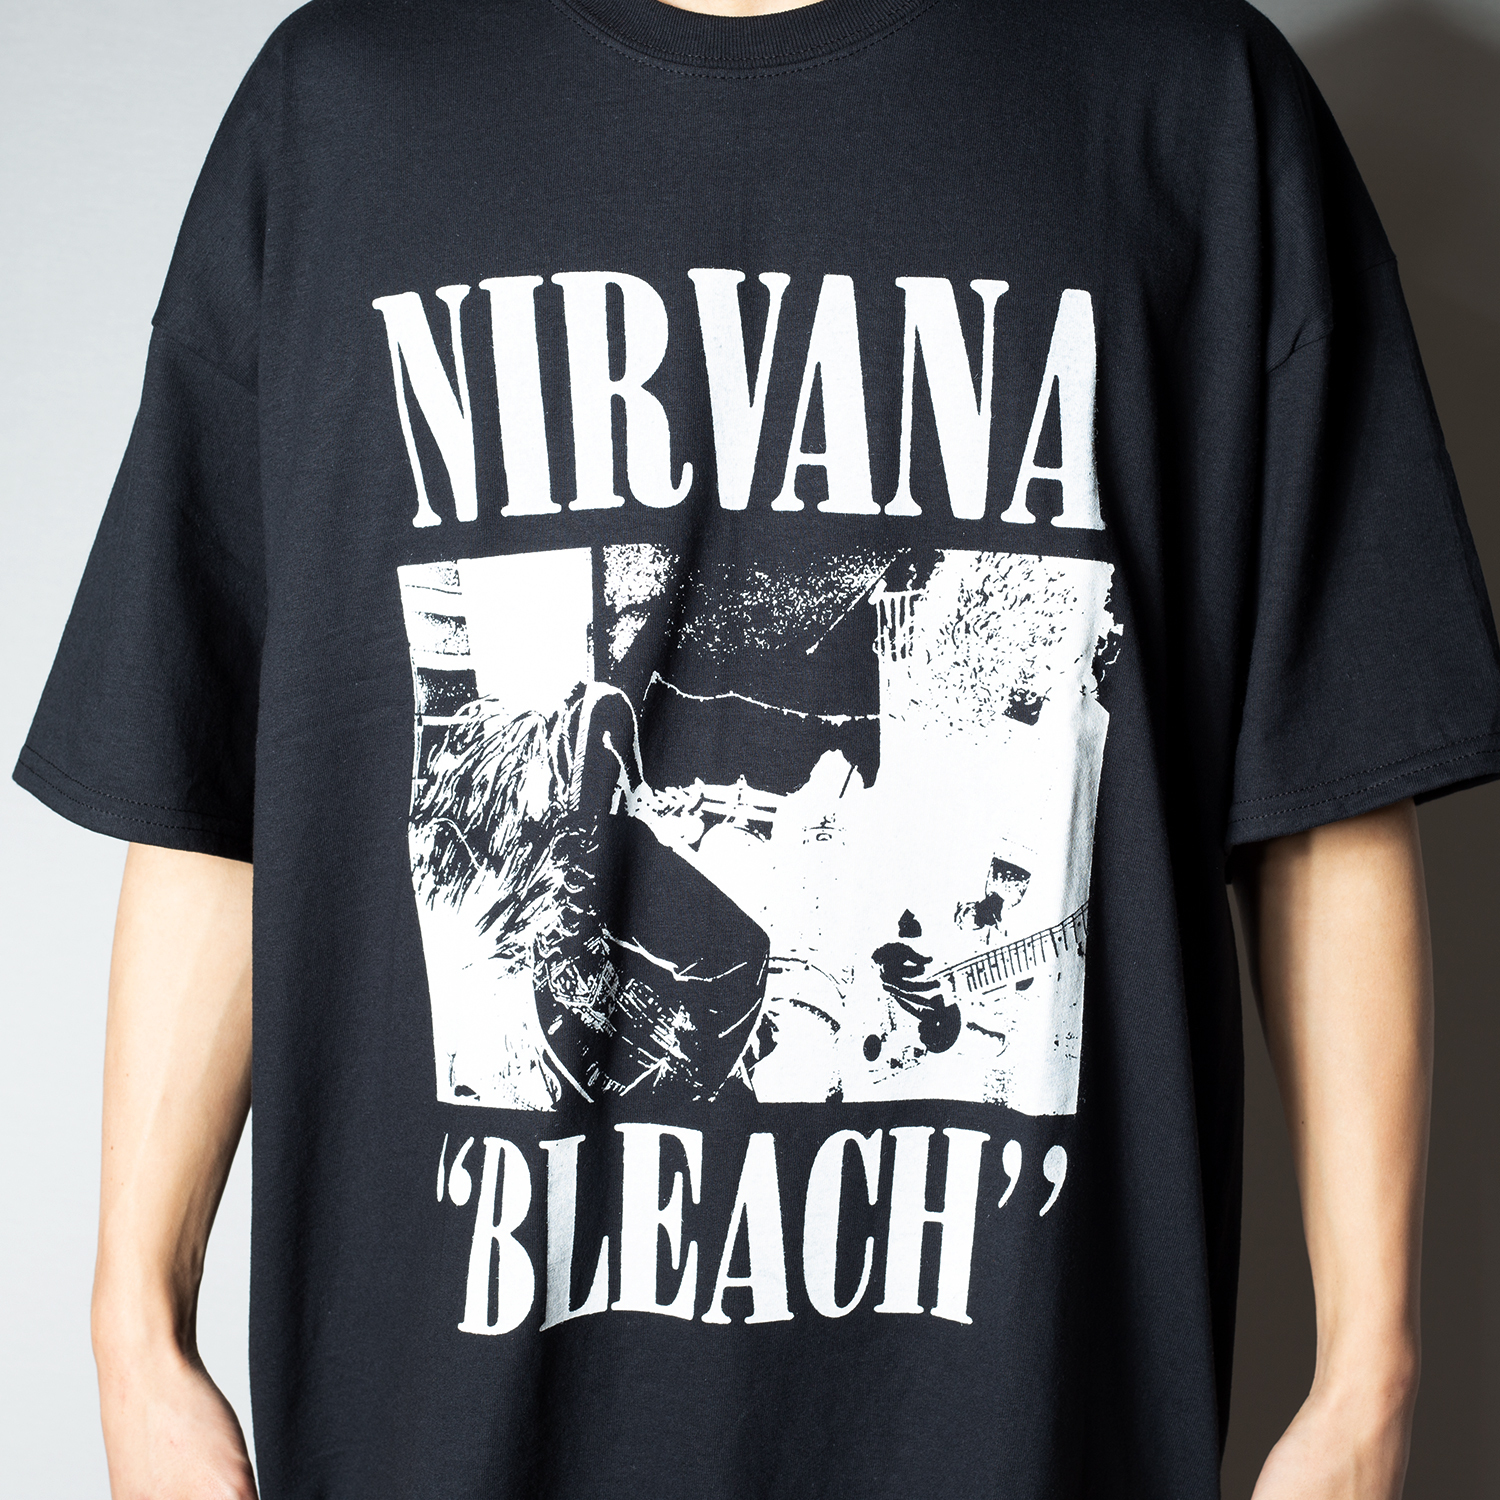 Nirvana ニルヴァーナ Bleach Tシャツ Gildan Kurt Cobain カートコバーン バンドtシャツ ロックtシャツ Sstgl Nirvana Bleach Oguoy Destroy It Create It Share It